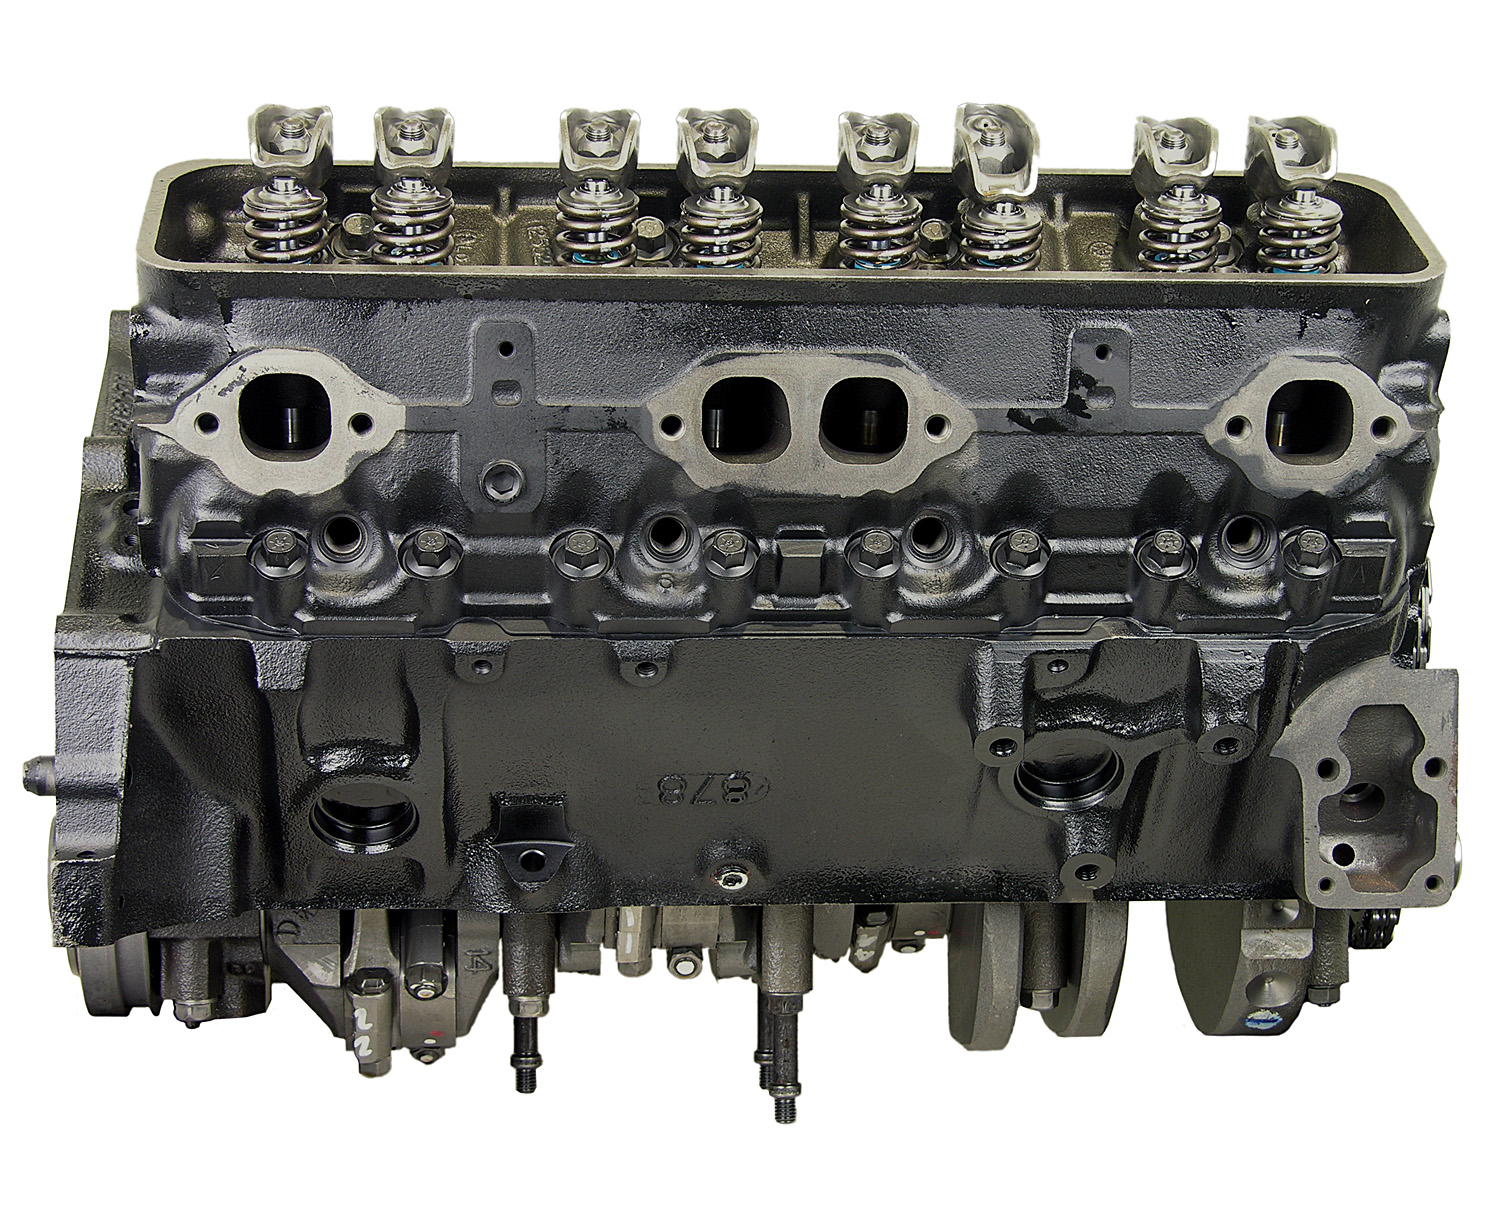 Chevy 305 5.0L V8 Remanufactured Engine - 1996-2000